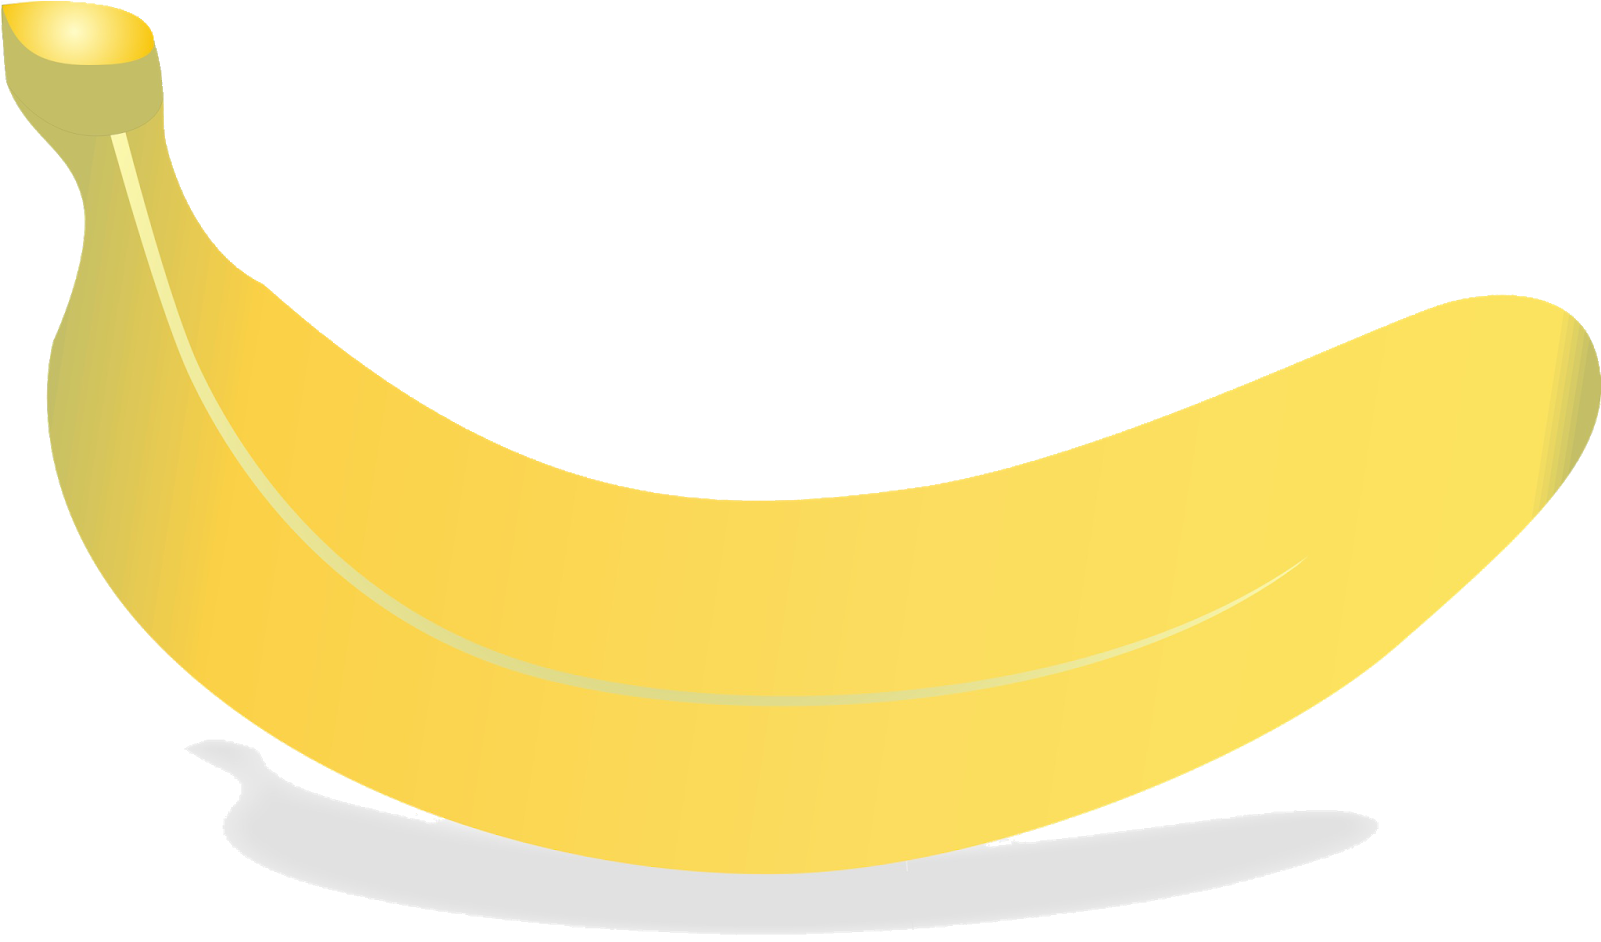 Here We Make Banana Png Design For Your Batter Design - Graphic Design (1600x956)